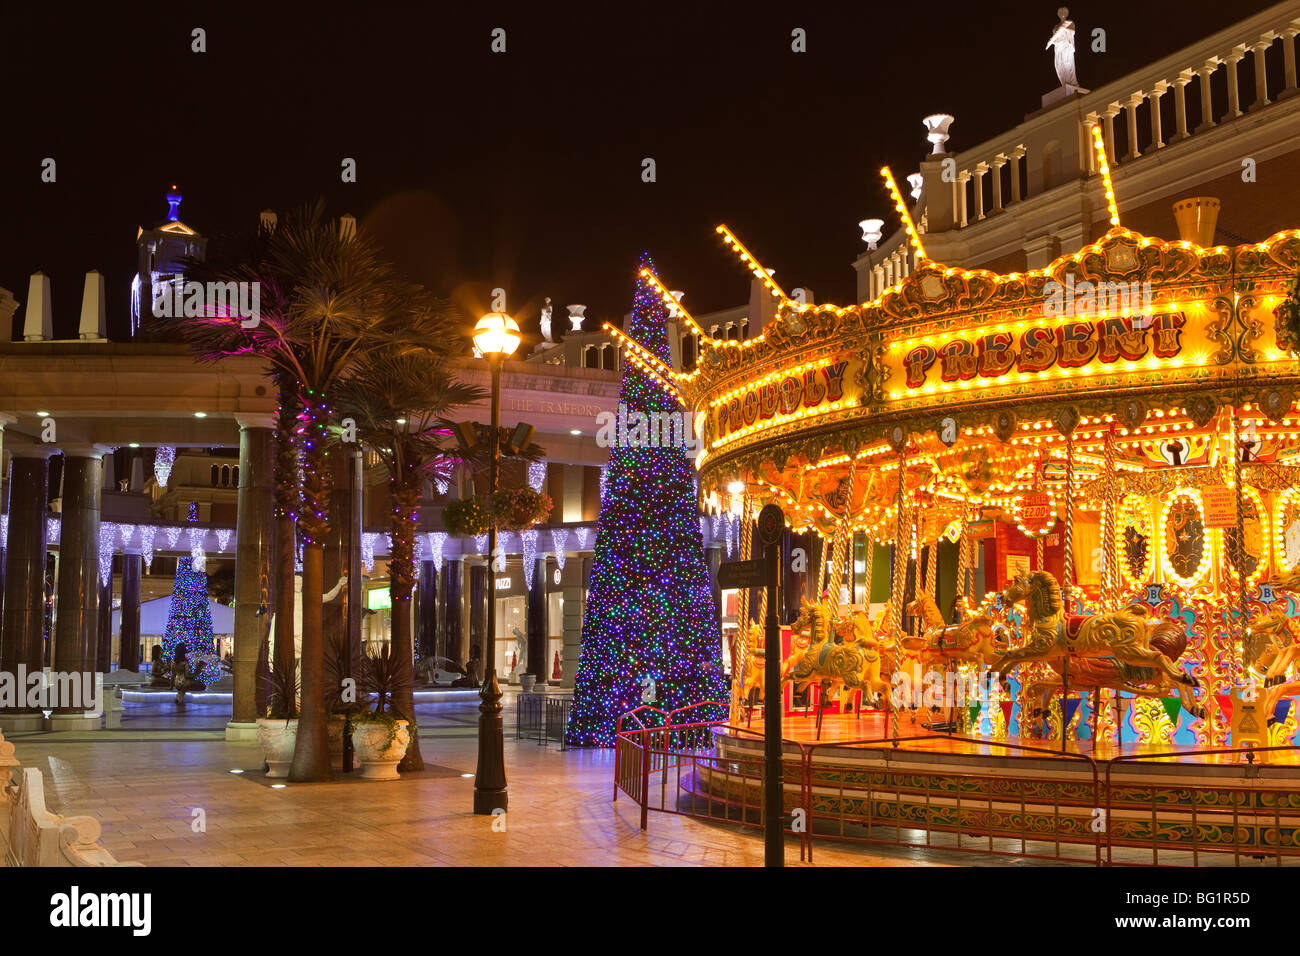 Royaume-uni, Angleterre, Manchester, Trafford Centre Shopping Mall, Barton Square, carrousel traditionnel et l'arbre de Noël Banque D'Images